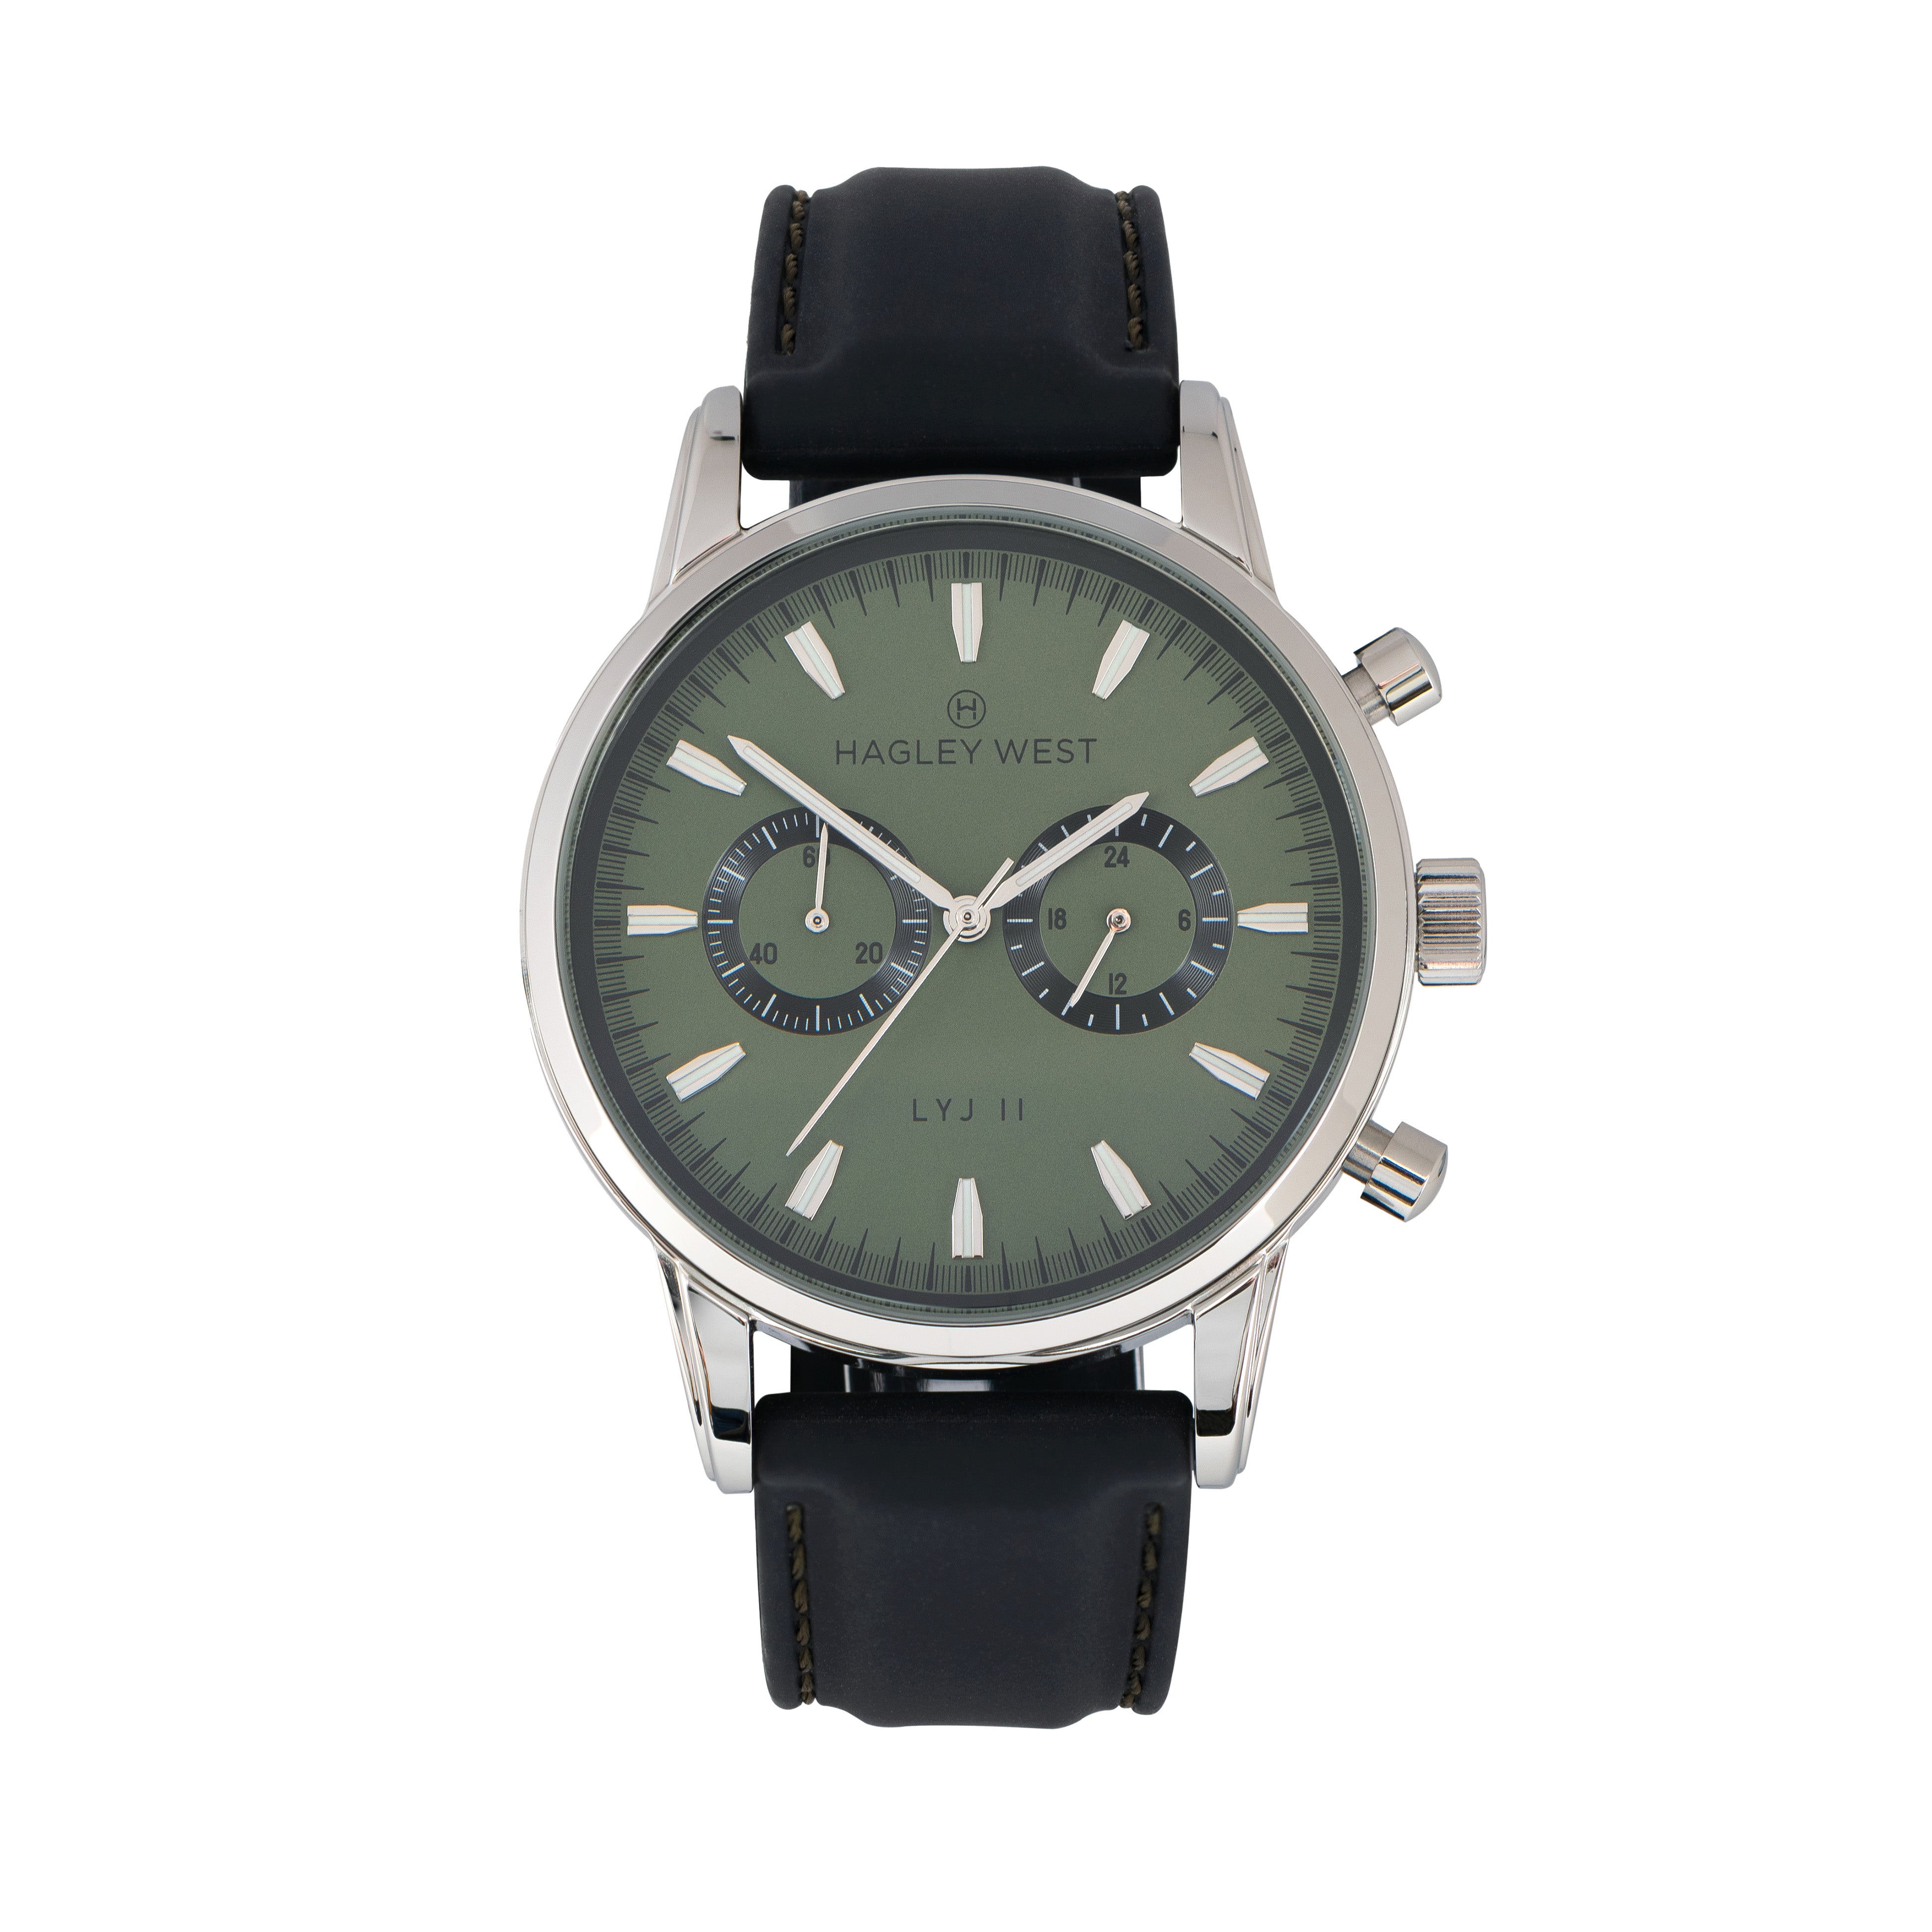 LYJ II Omaha | Green & Silver Watch | Men's Watches | Hagley West